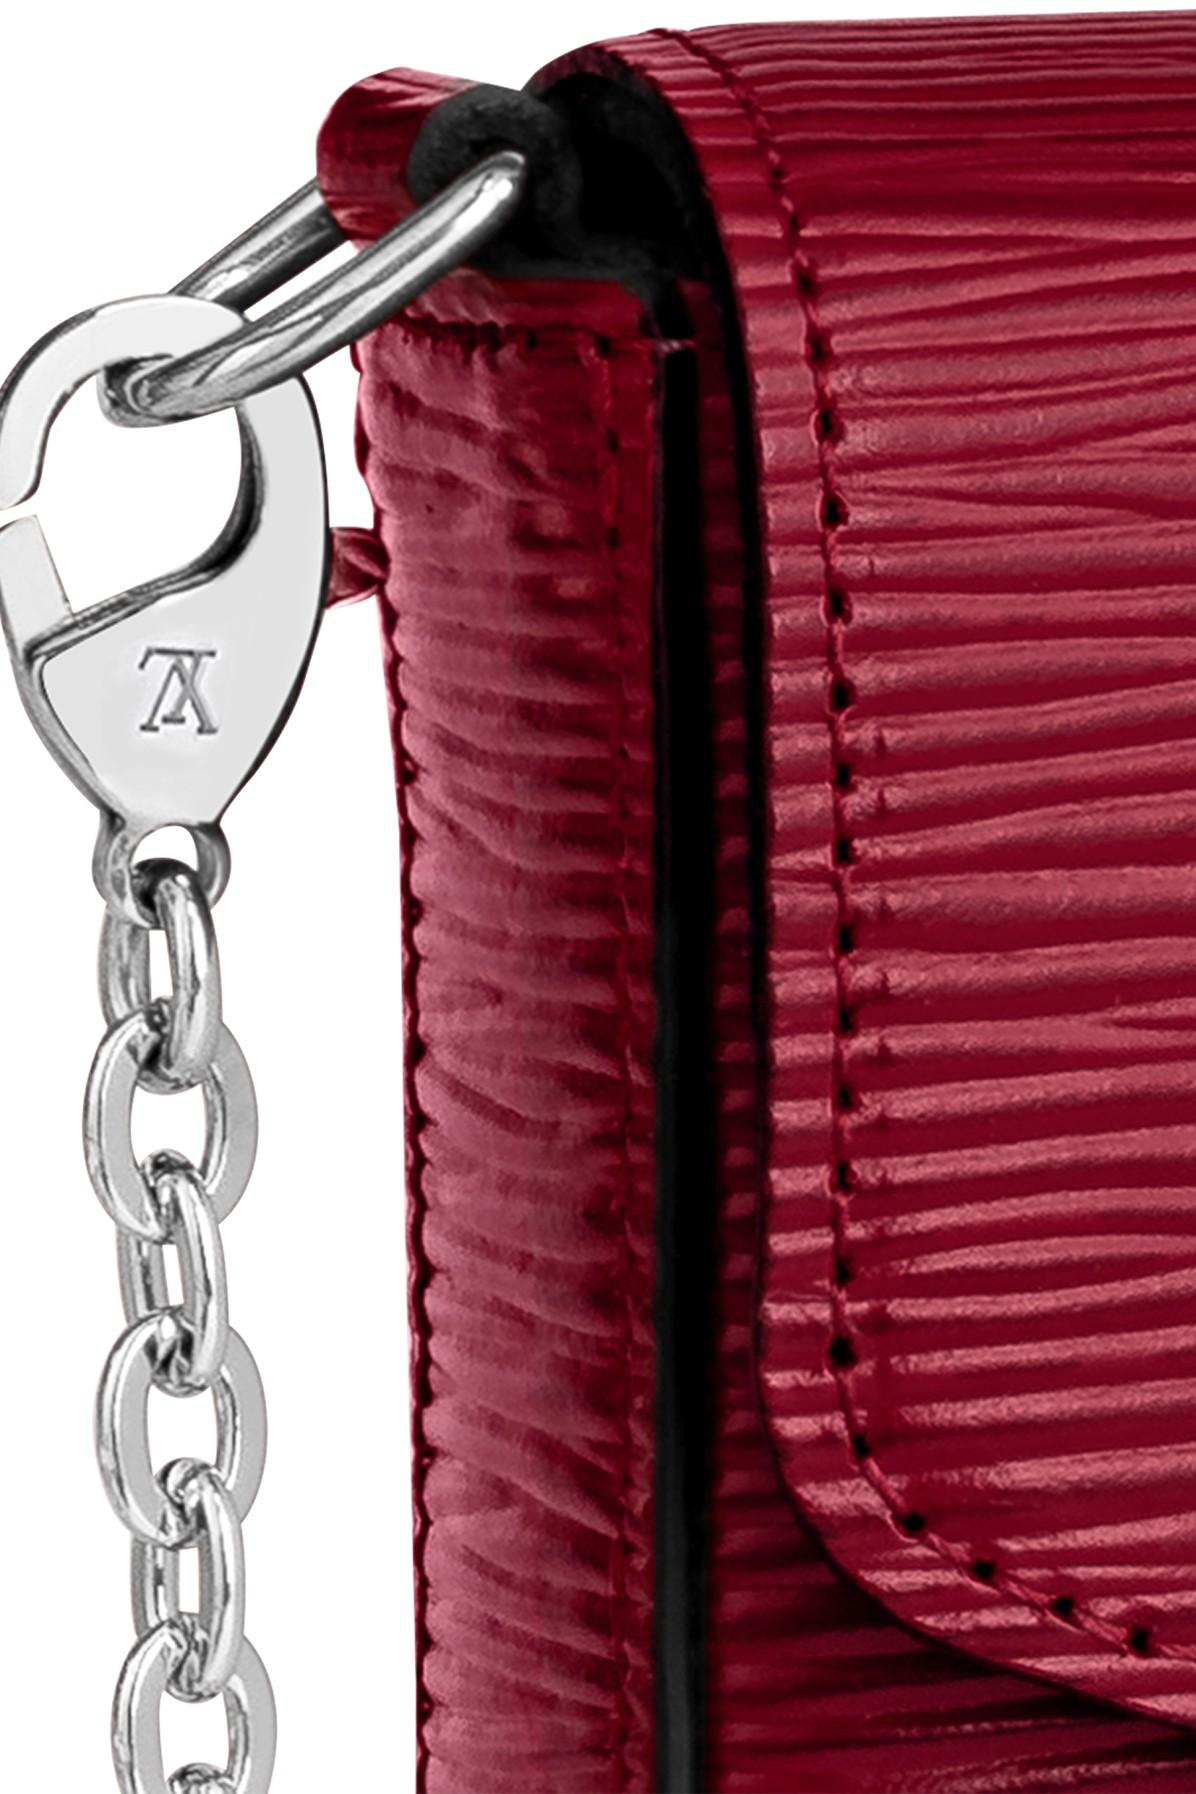 Louis Vuitton POCHETTE FELICIE Epi leather. Pink & black  Louis vuitton  handbags outlet, Louis vuitton handbags, Louis vuitton handbags black